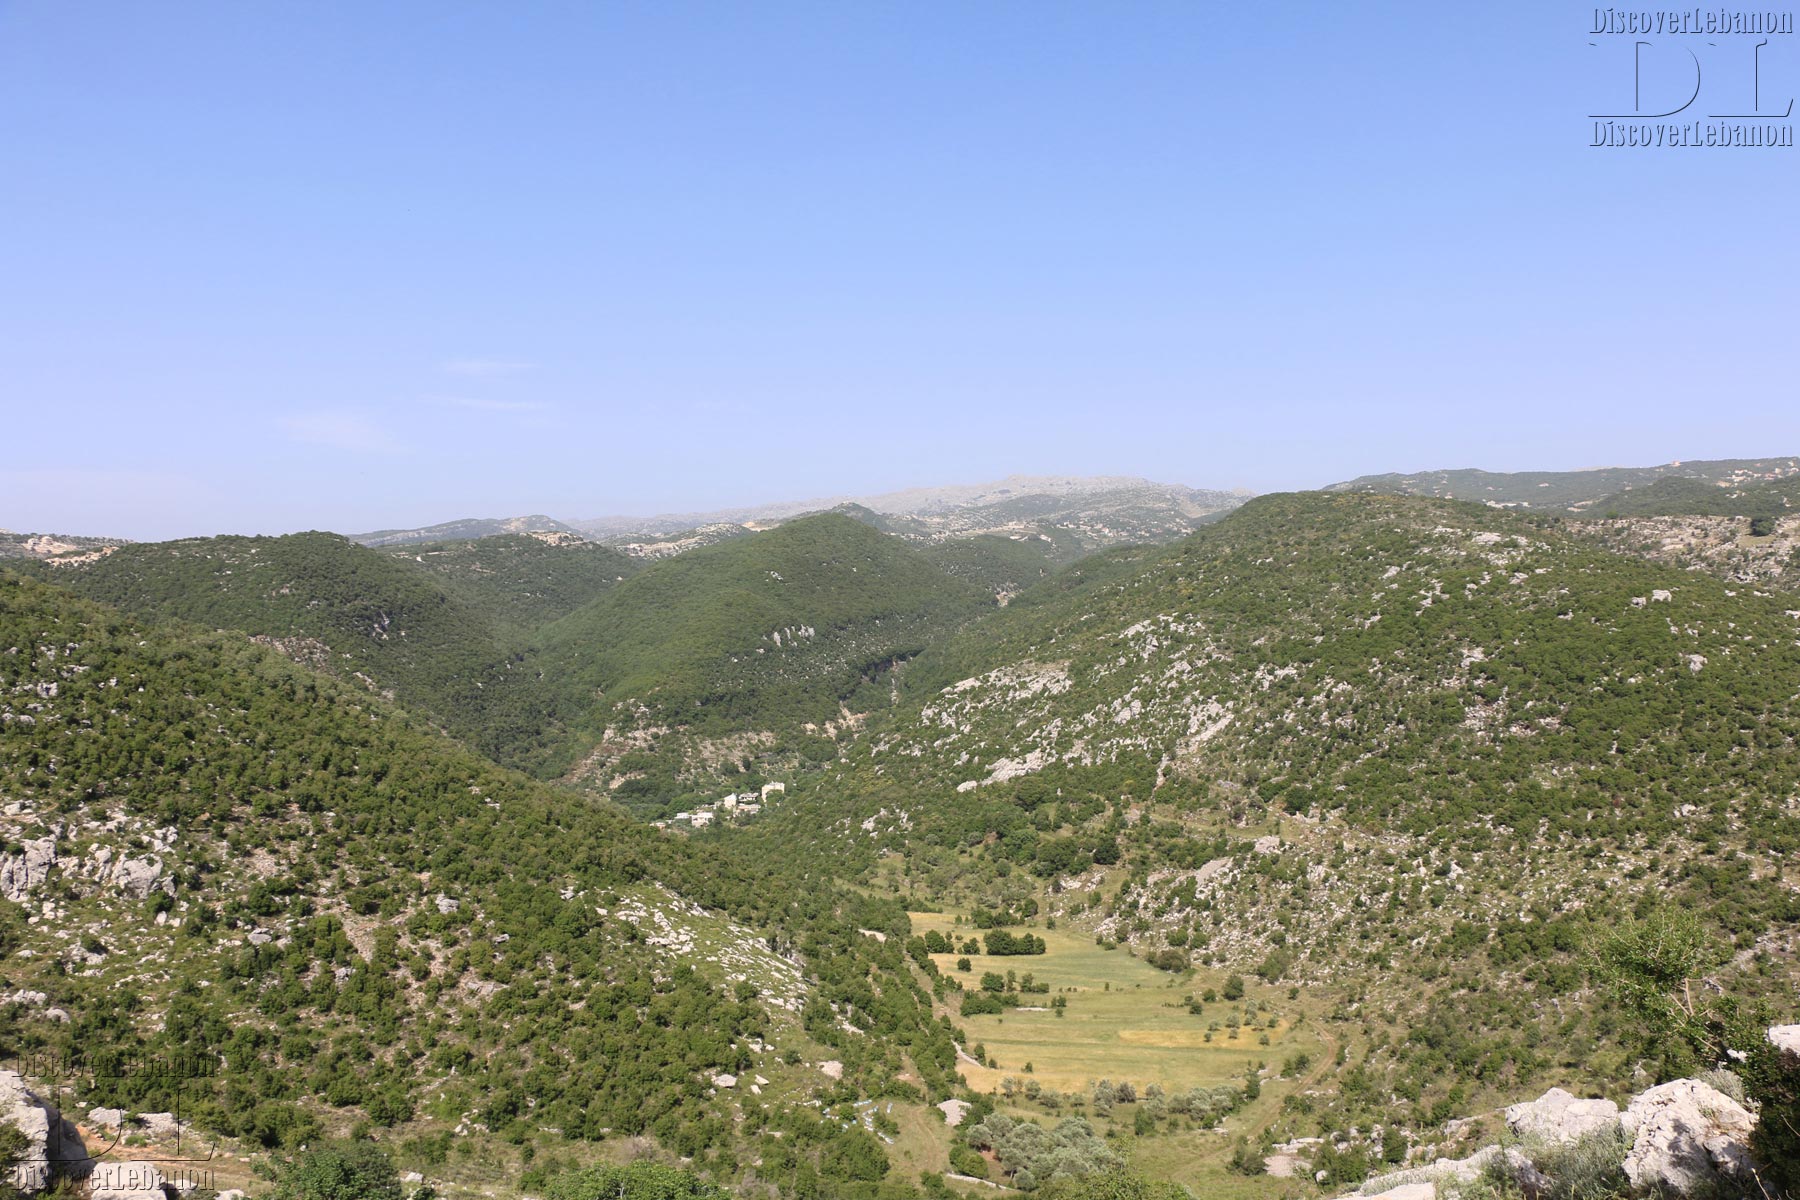 Lands and mountains arround Habil village